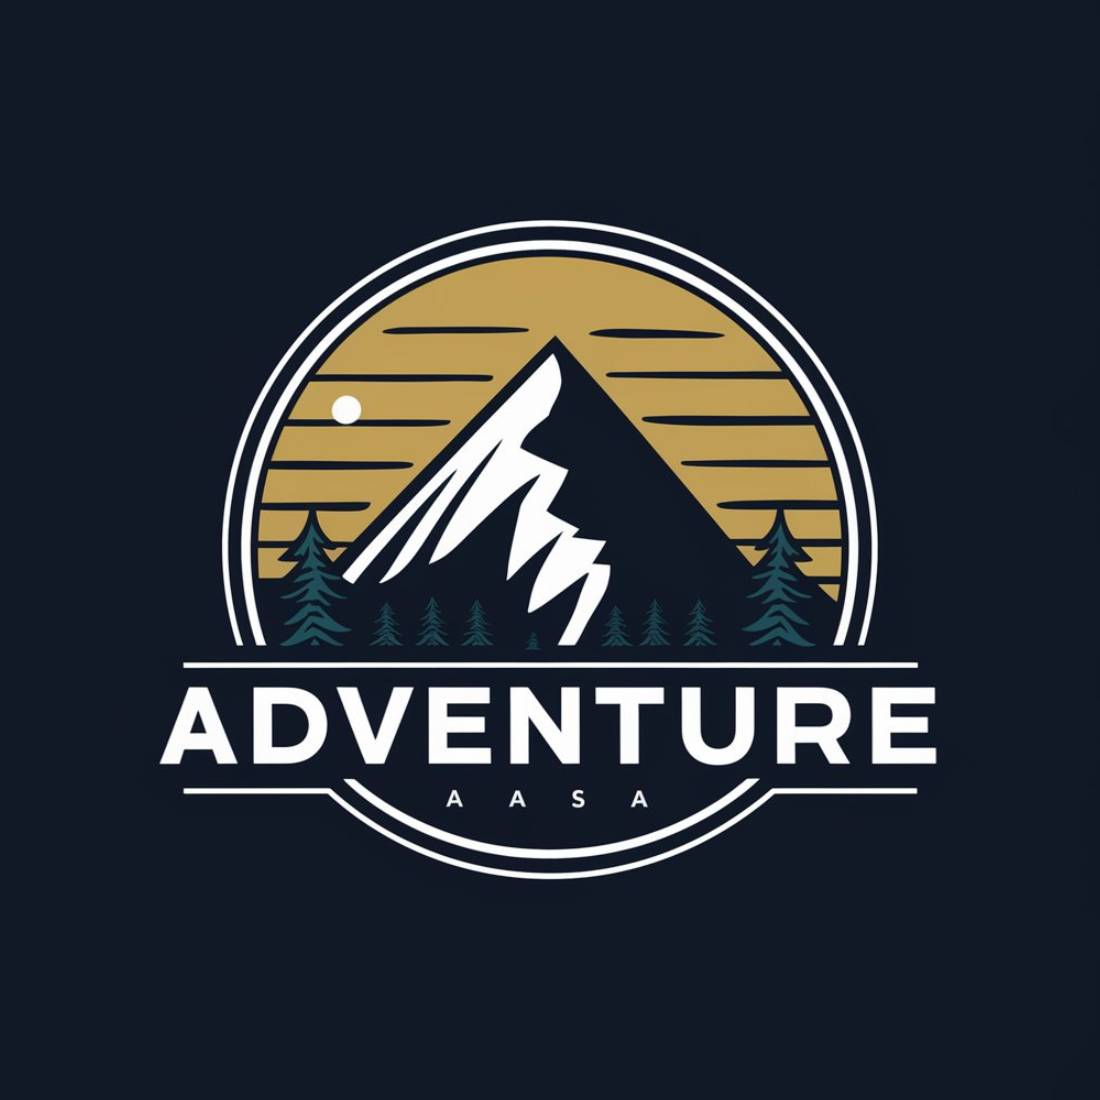 Adventure Logo Design preview image.